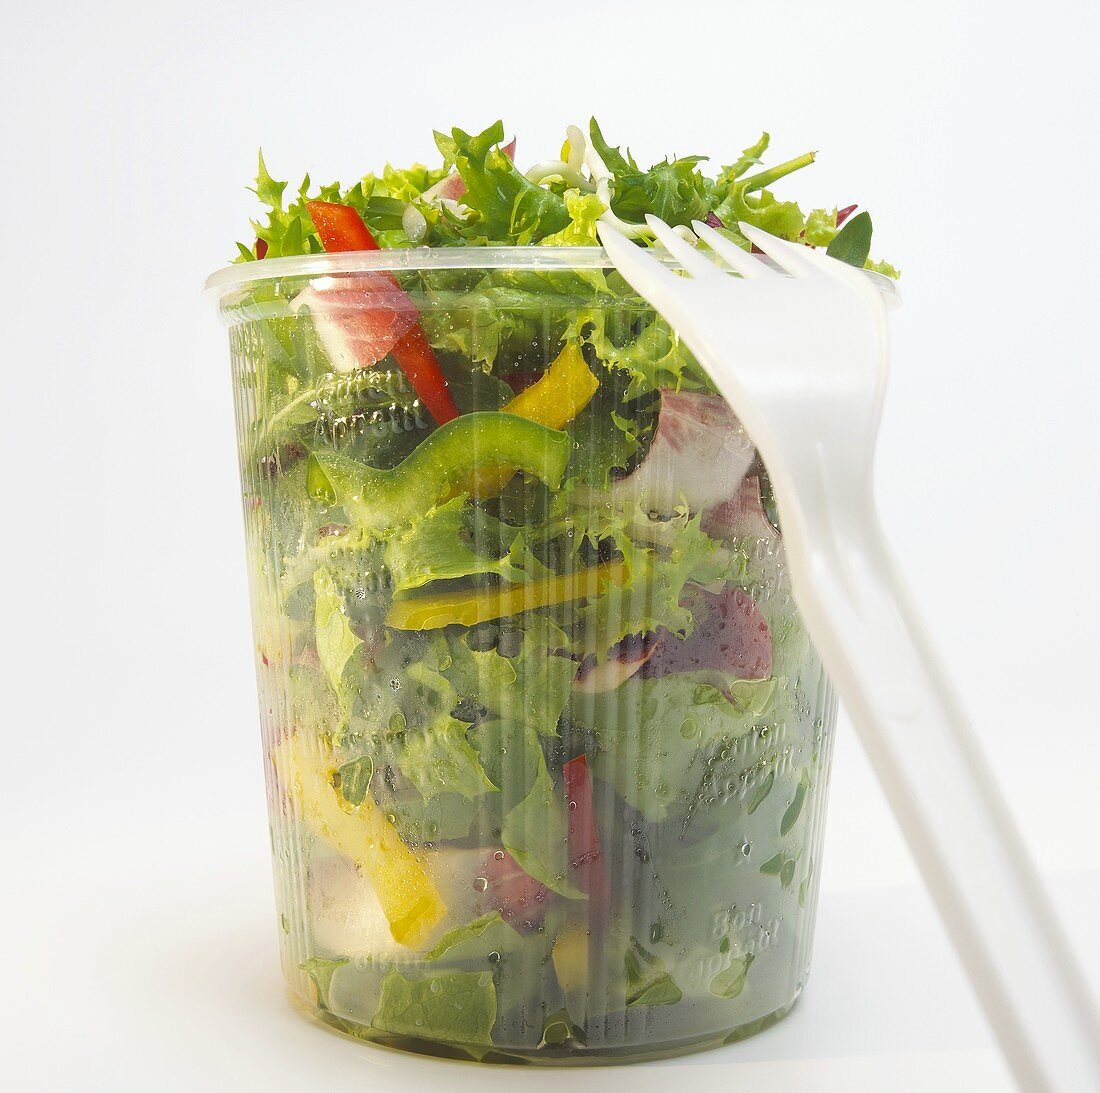 Mixed salad in plastic bin, close-up